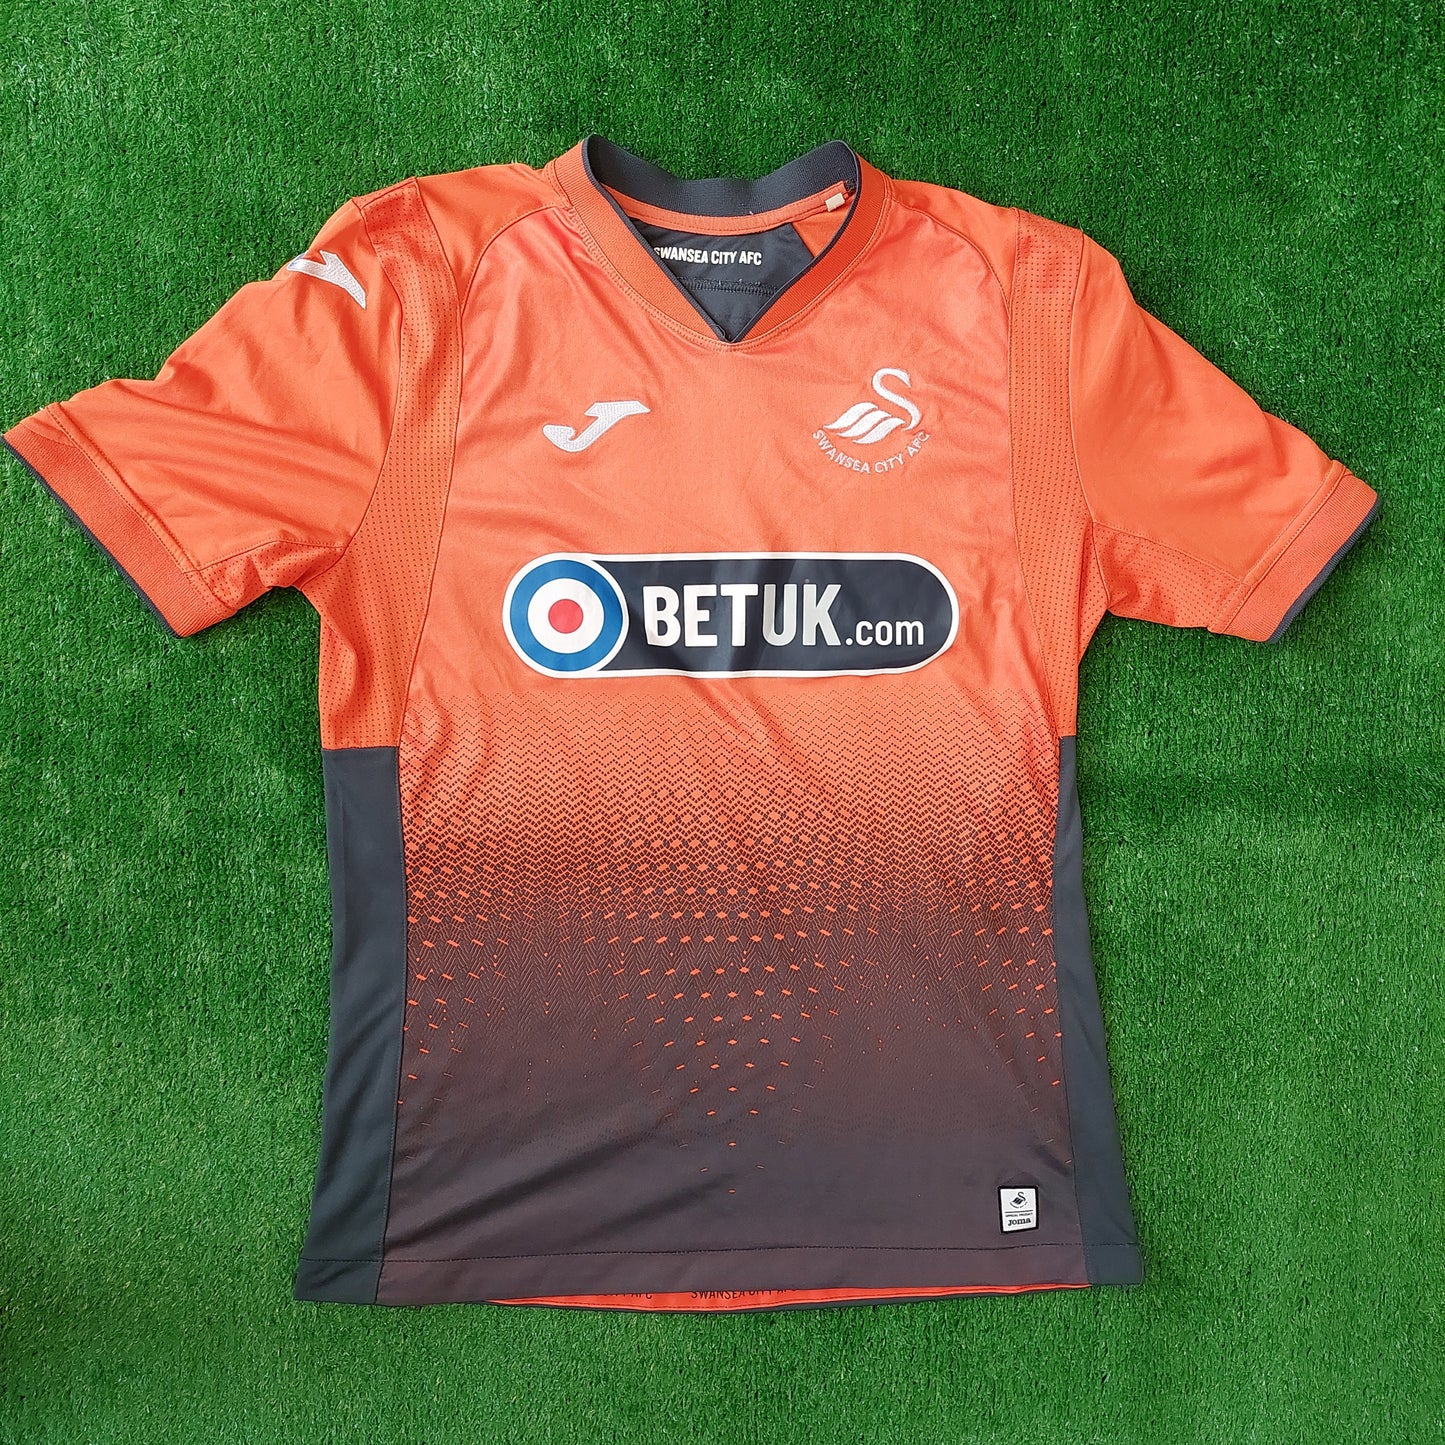 Swansea City 2018/19 Away Shirt (Excellent) - Size S